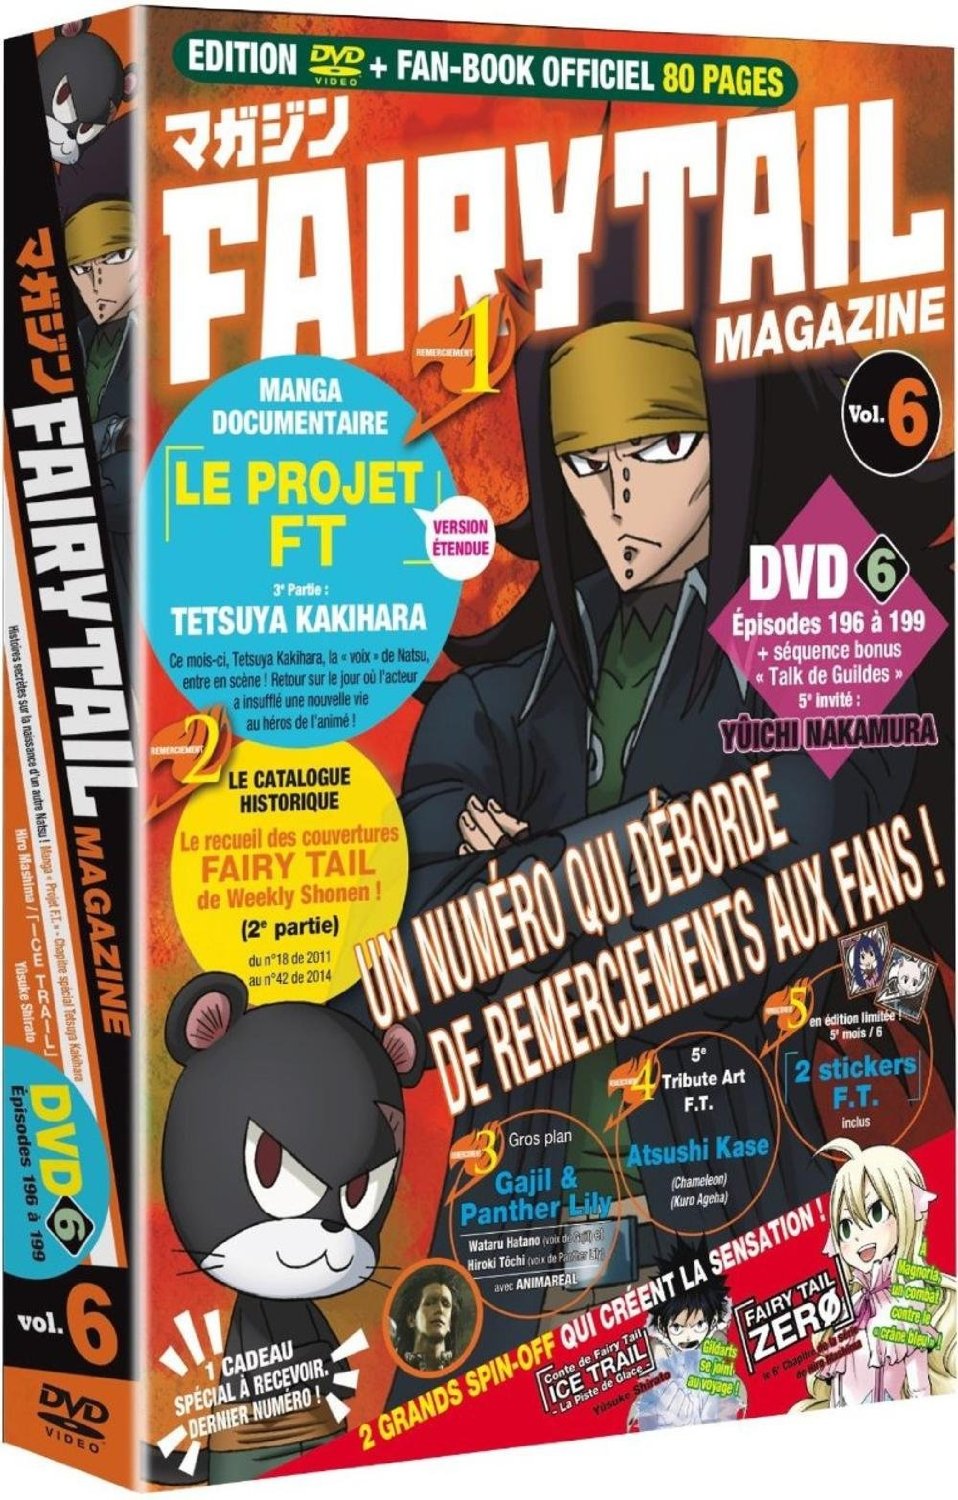 fairy-tail-magazine-vol6.jpg